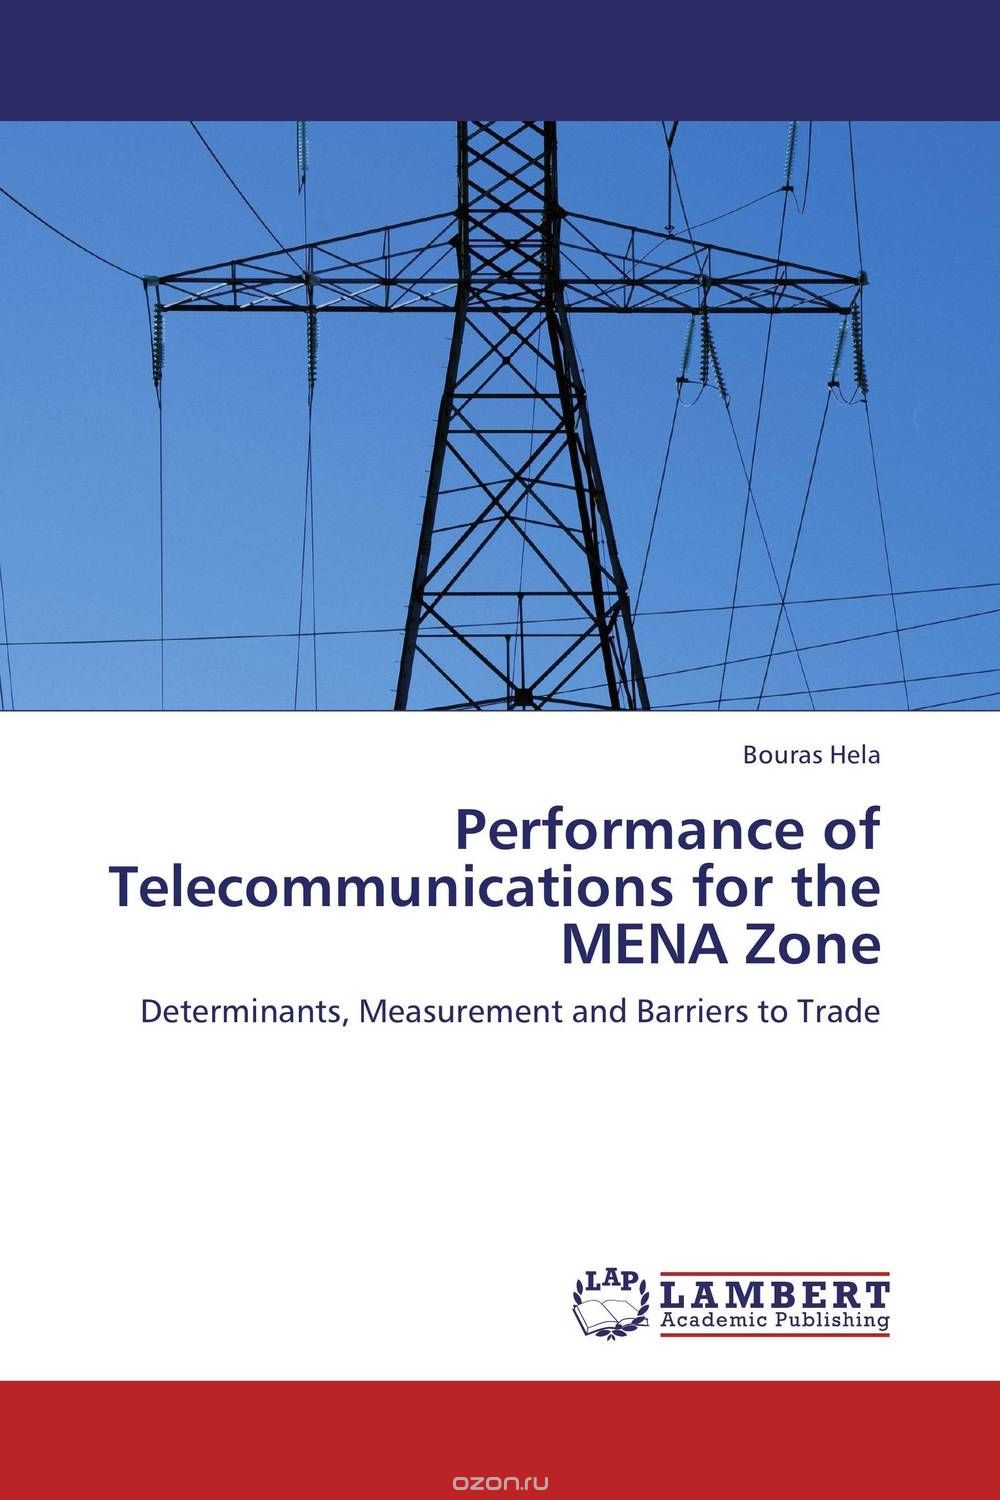 Скачать книгу "Performance of Telecommunications for the MENA Zone"